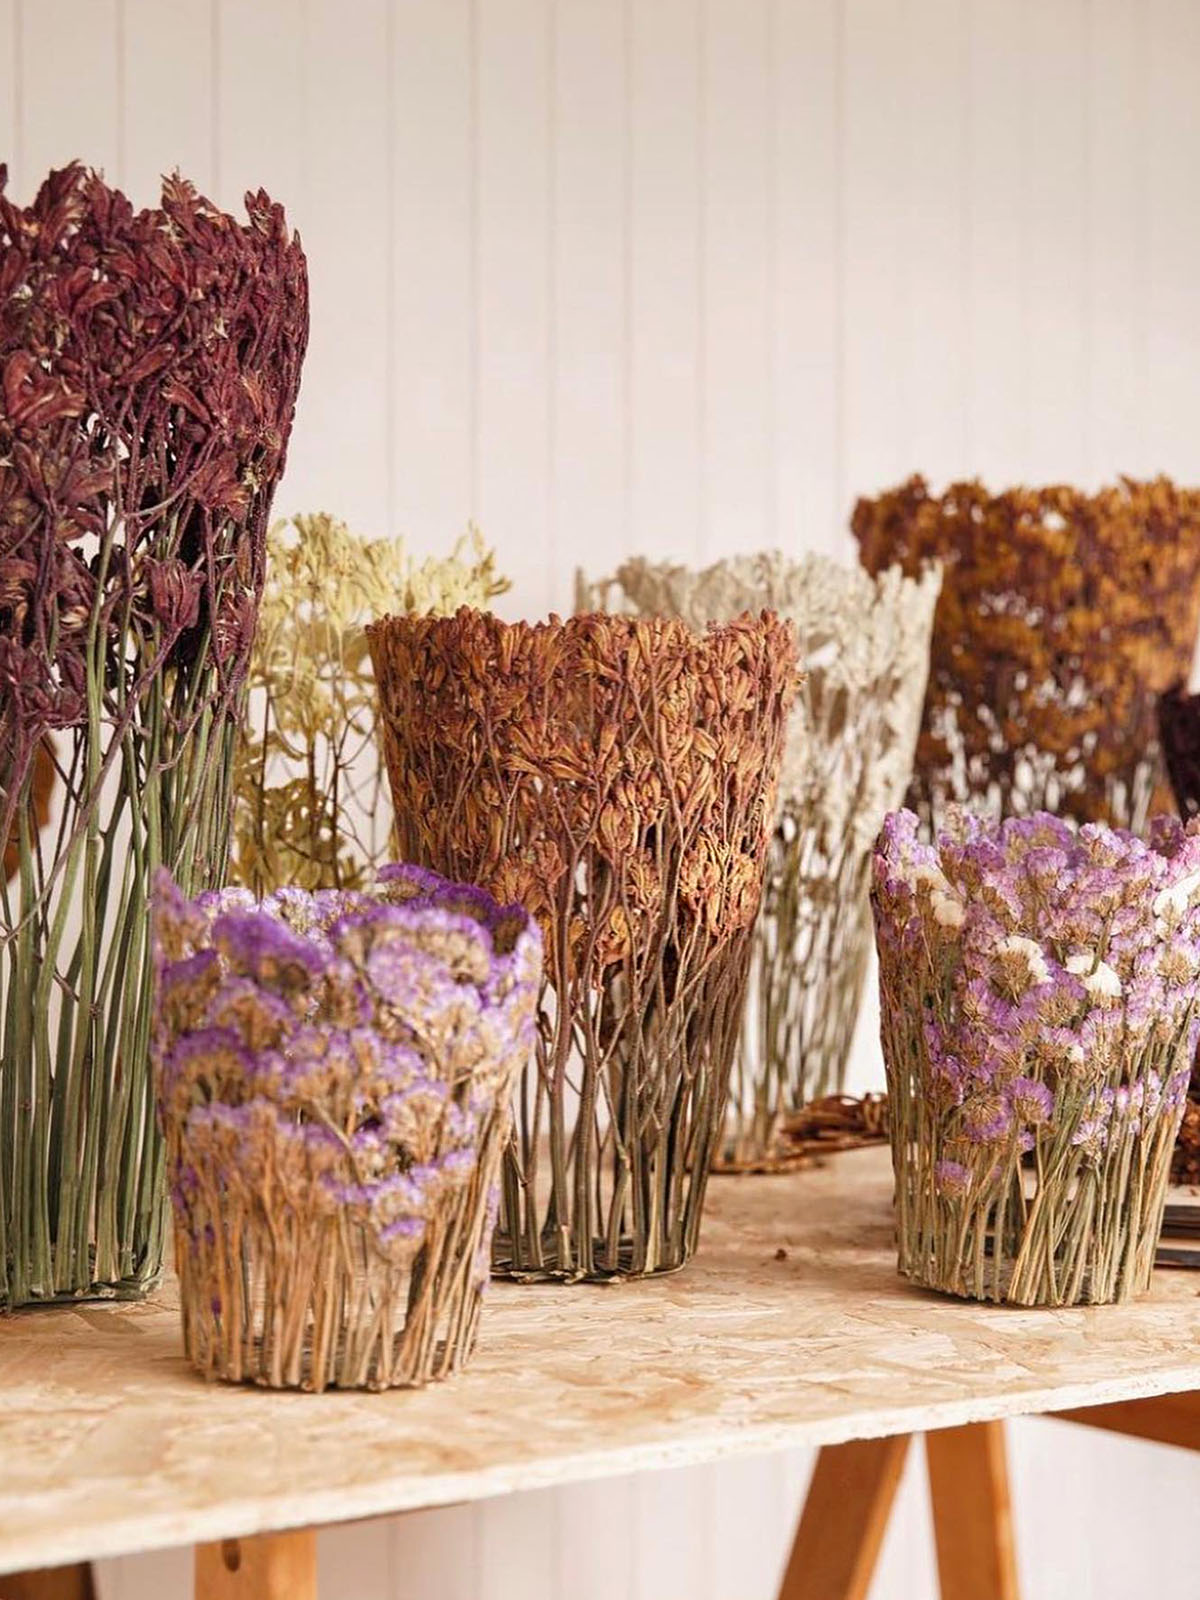 Sculptural vessels dried flowers Shannon Clegg on Thursd